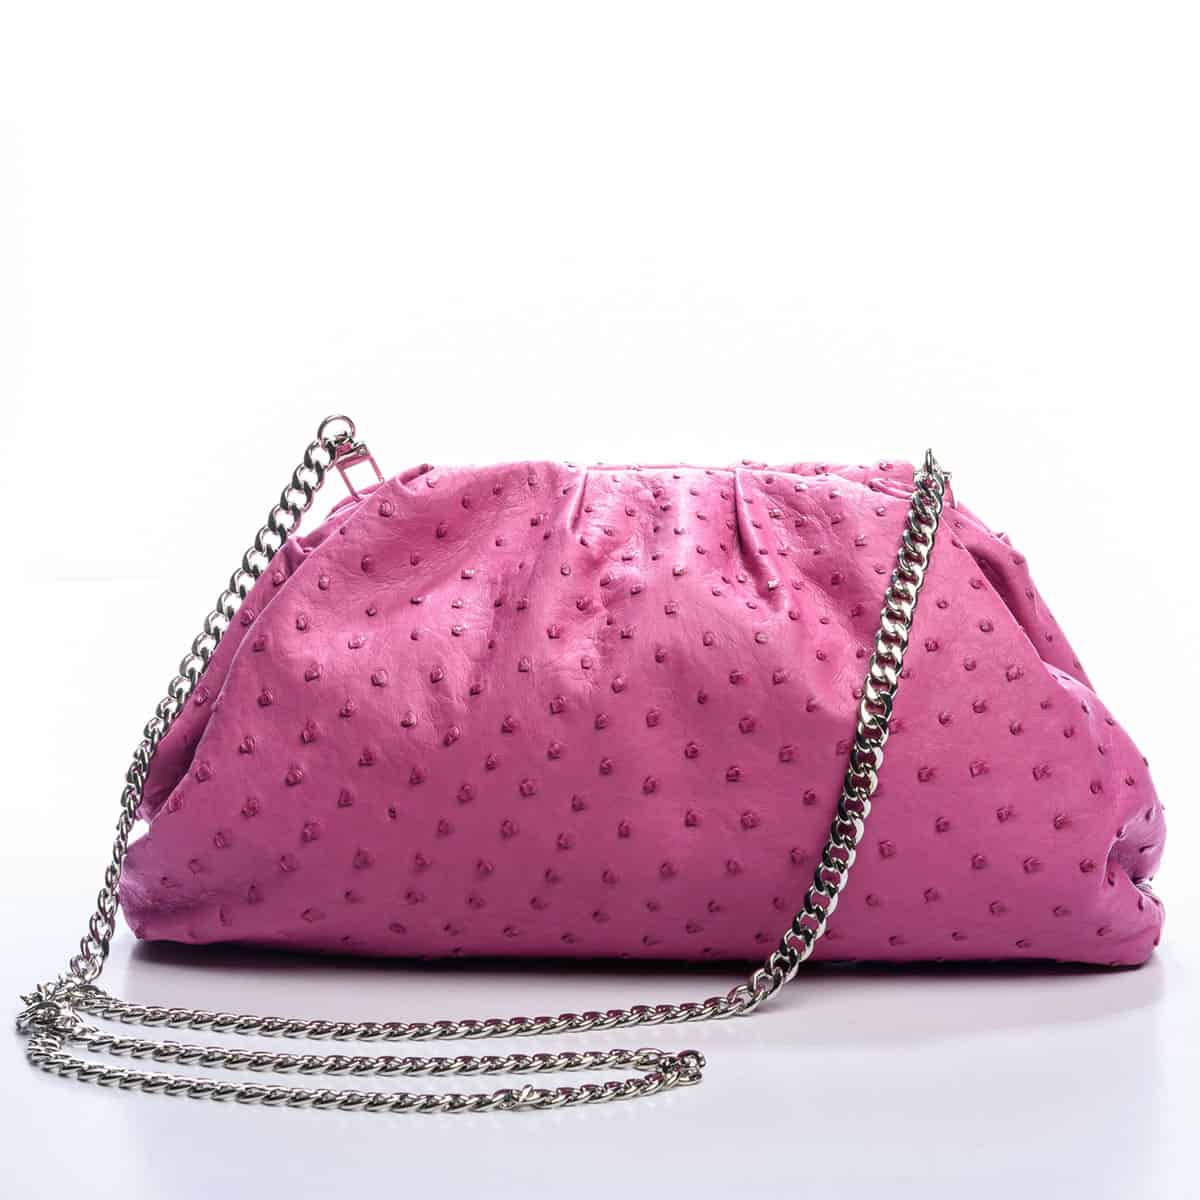 Claudette Women's Chain Bag, Pink Ostrich